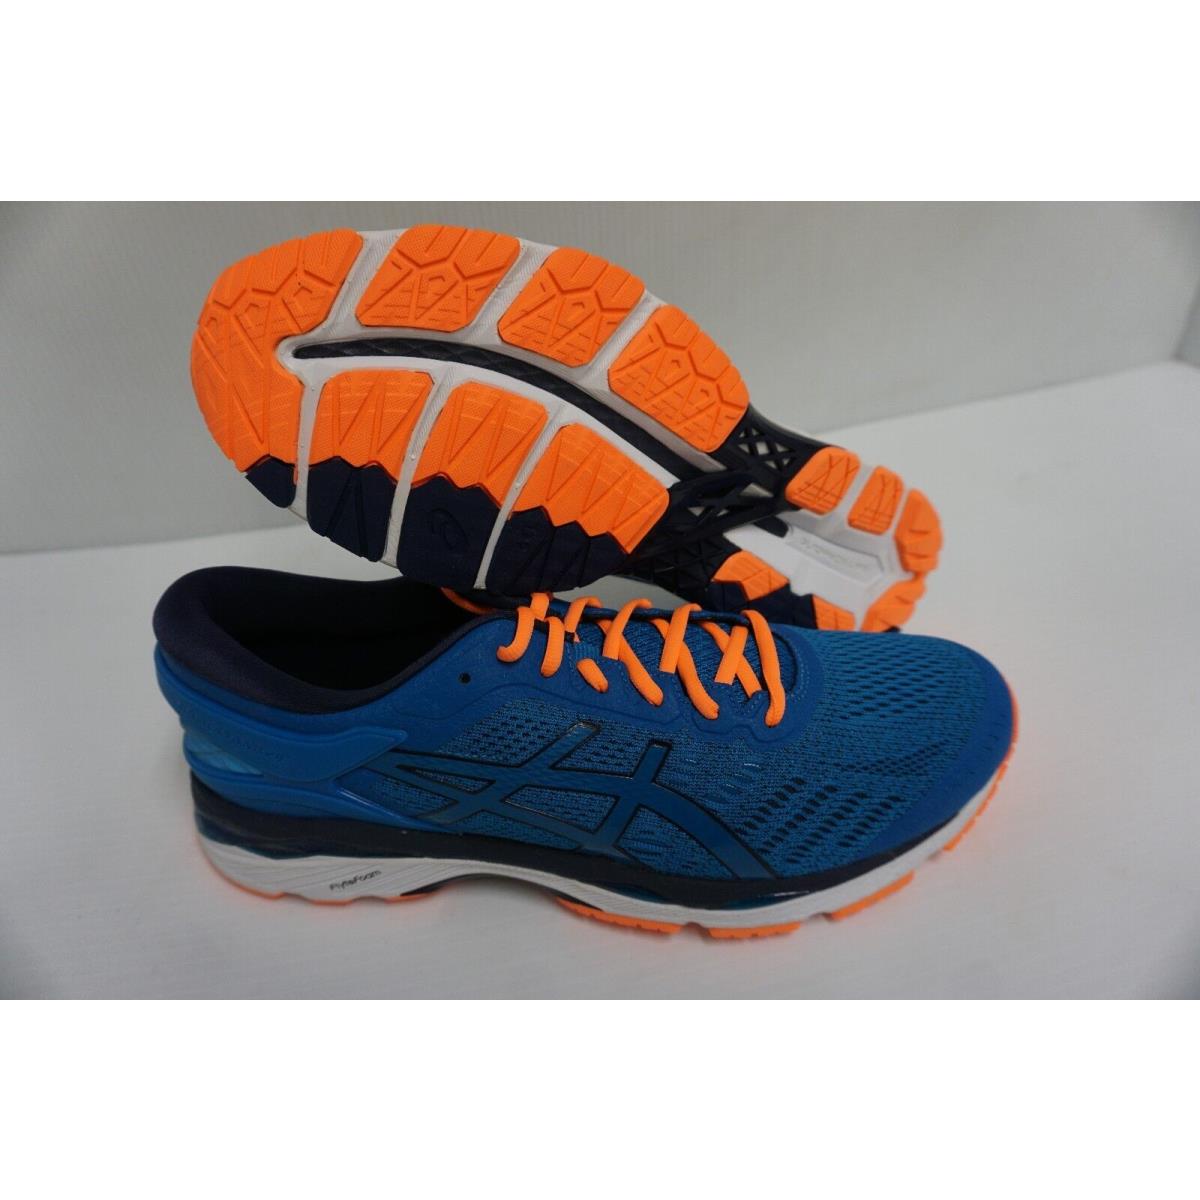 Asics Men`s Gel Kayano 24 Running Shoes Directoire Blue Hot Orange Size 9 us